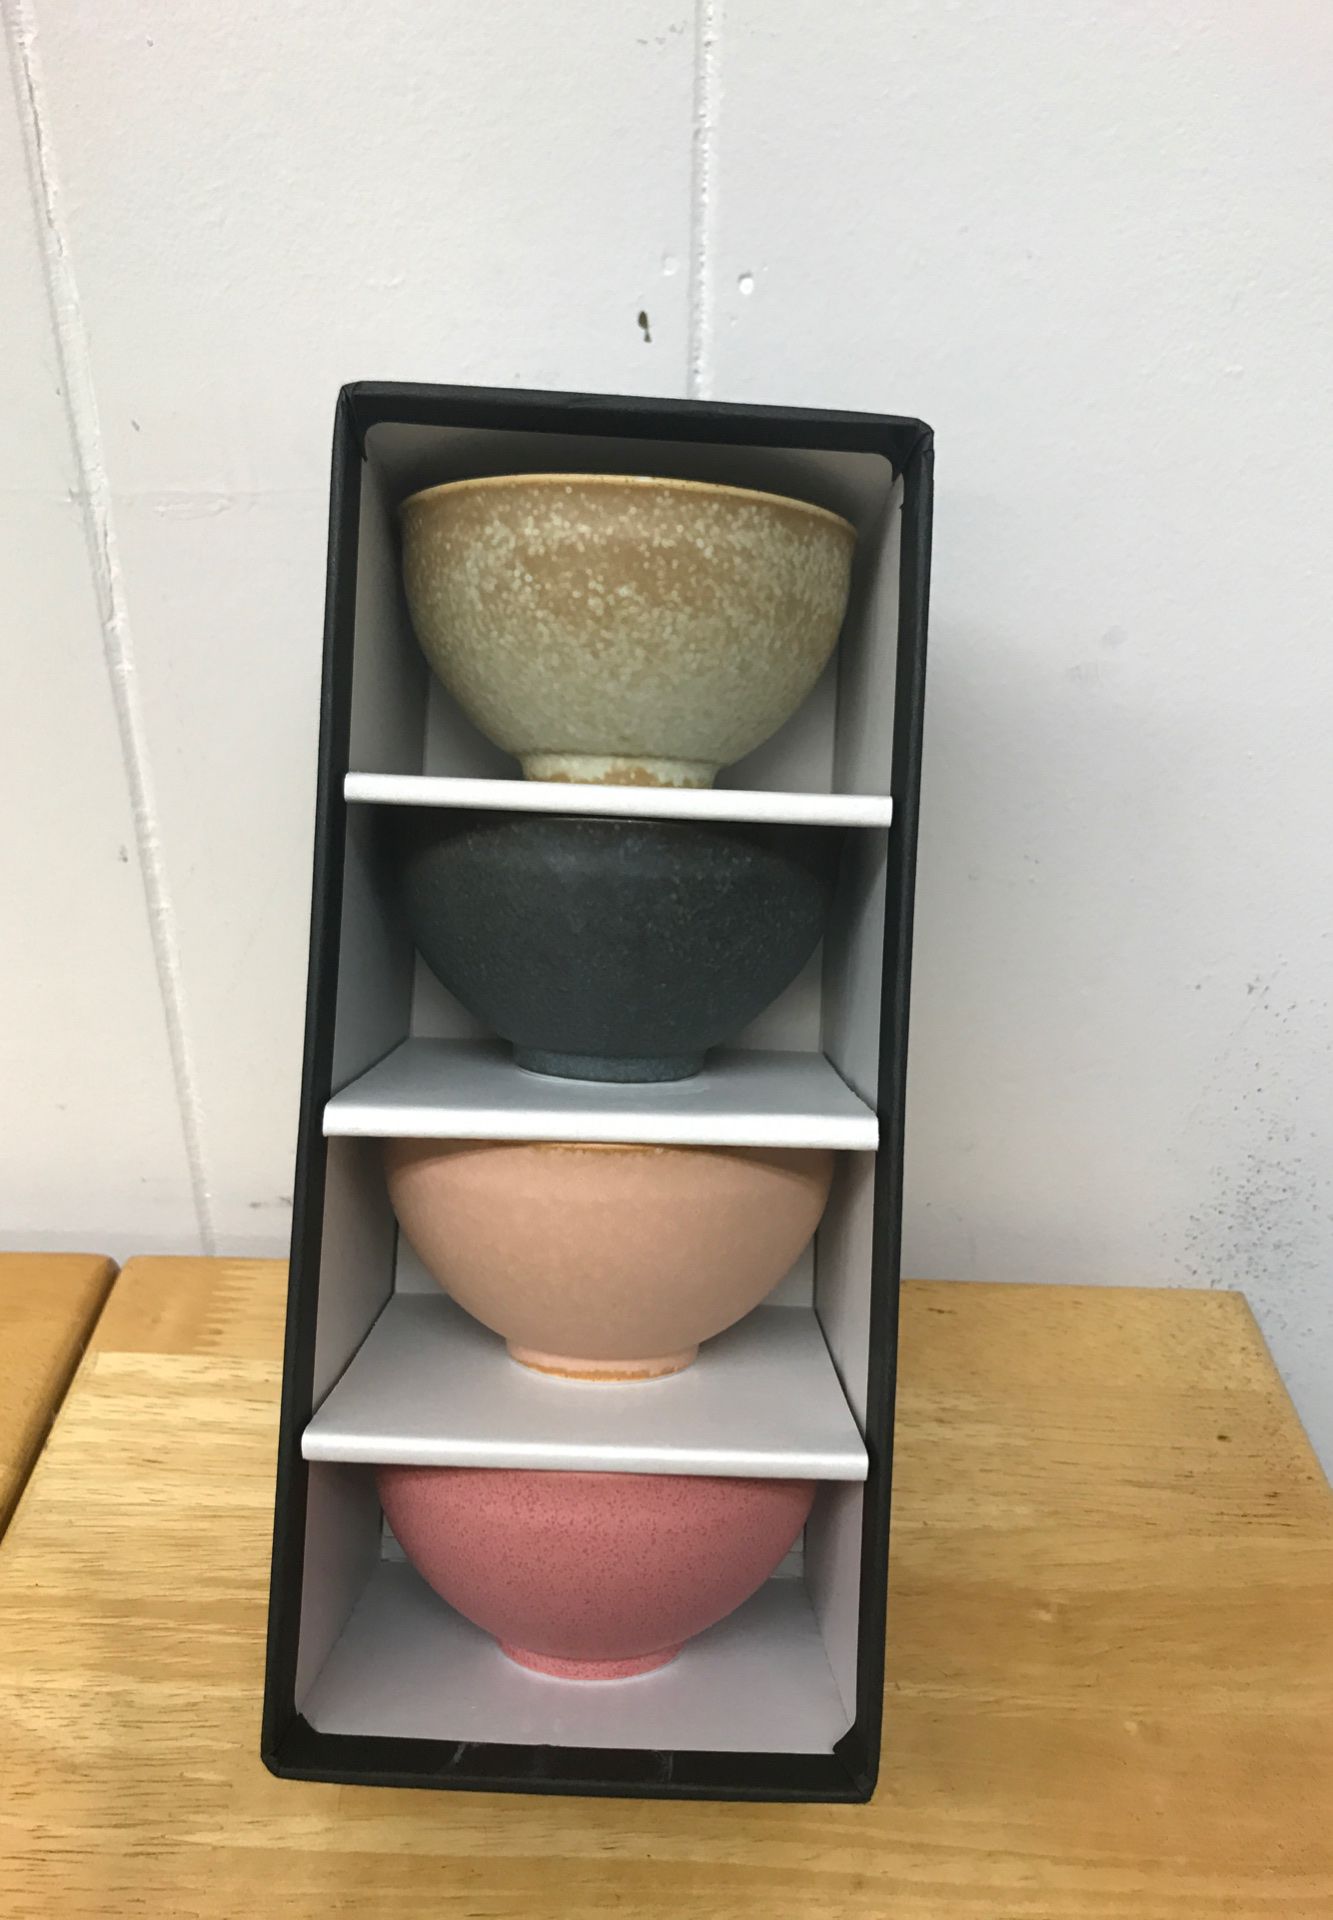 Miya tea cup or sushi bowls set